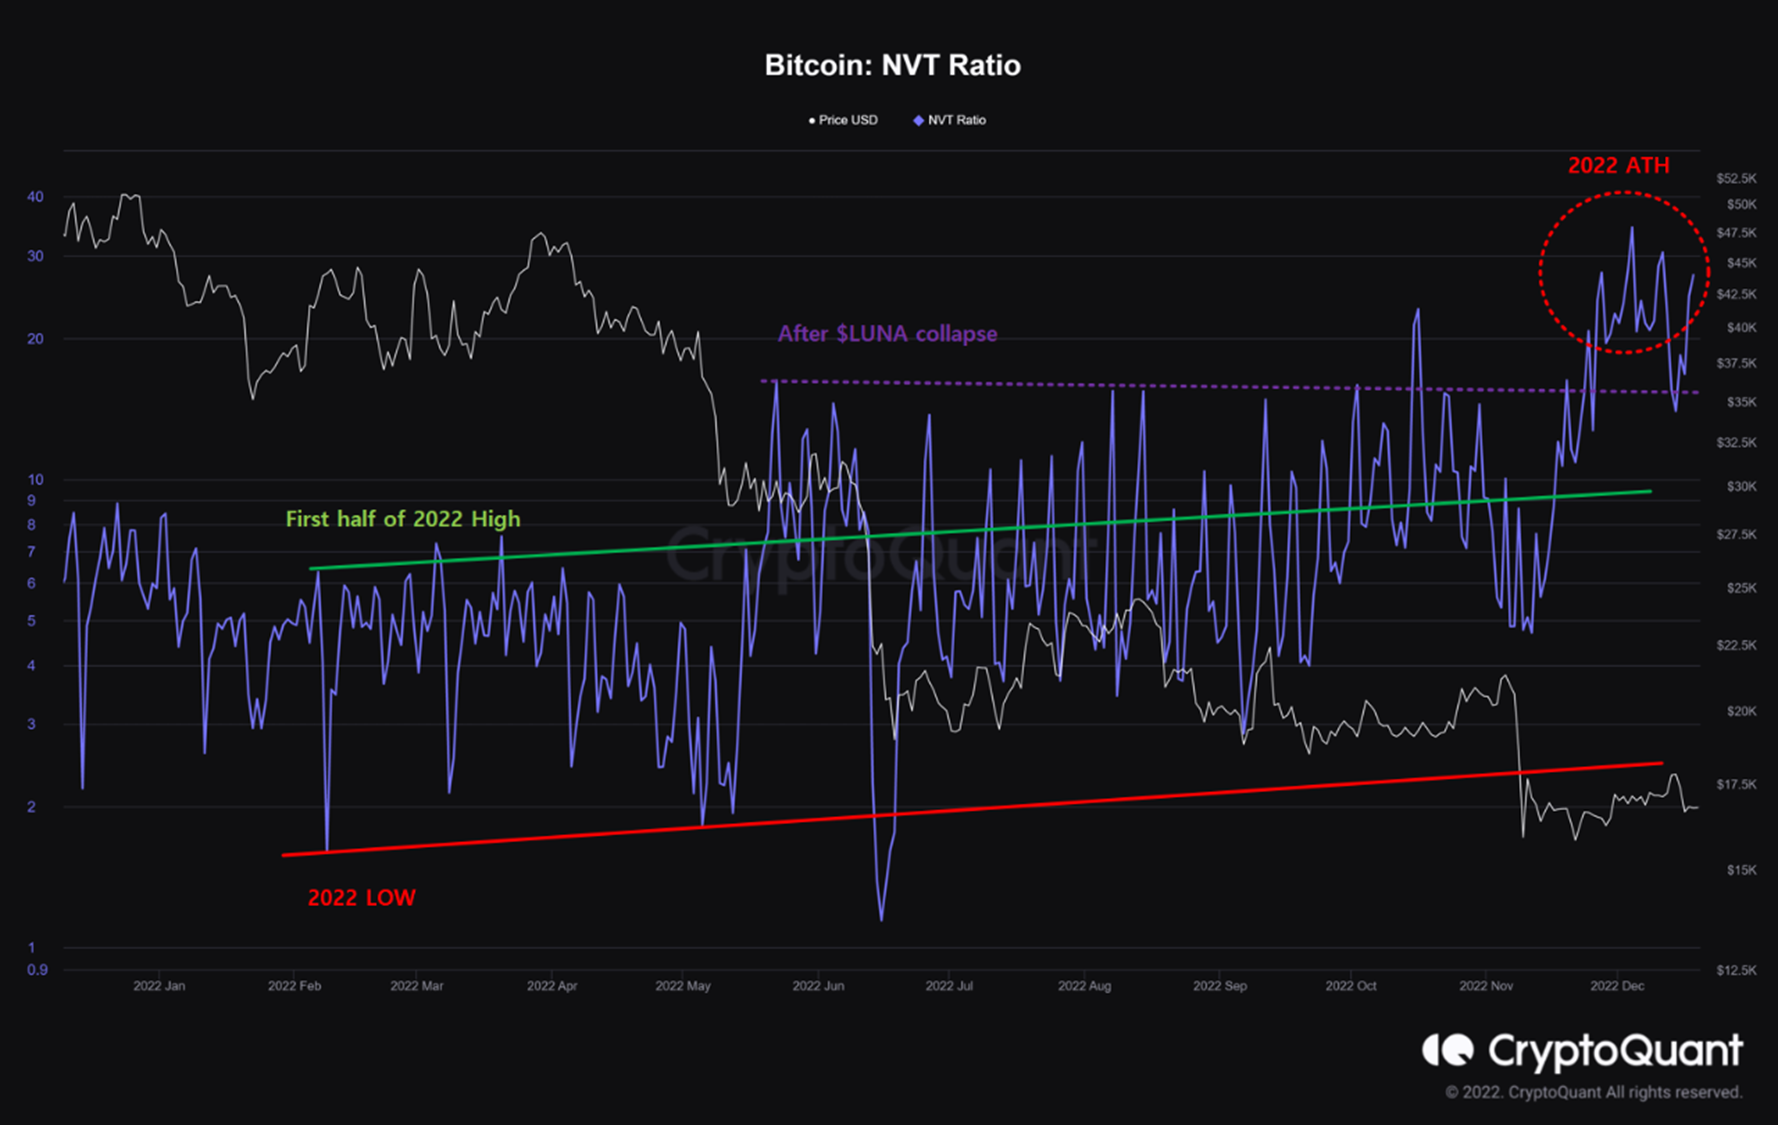 Bitcoin NVT ratio